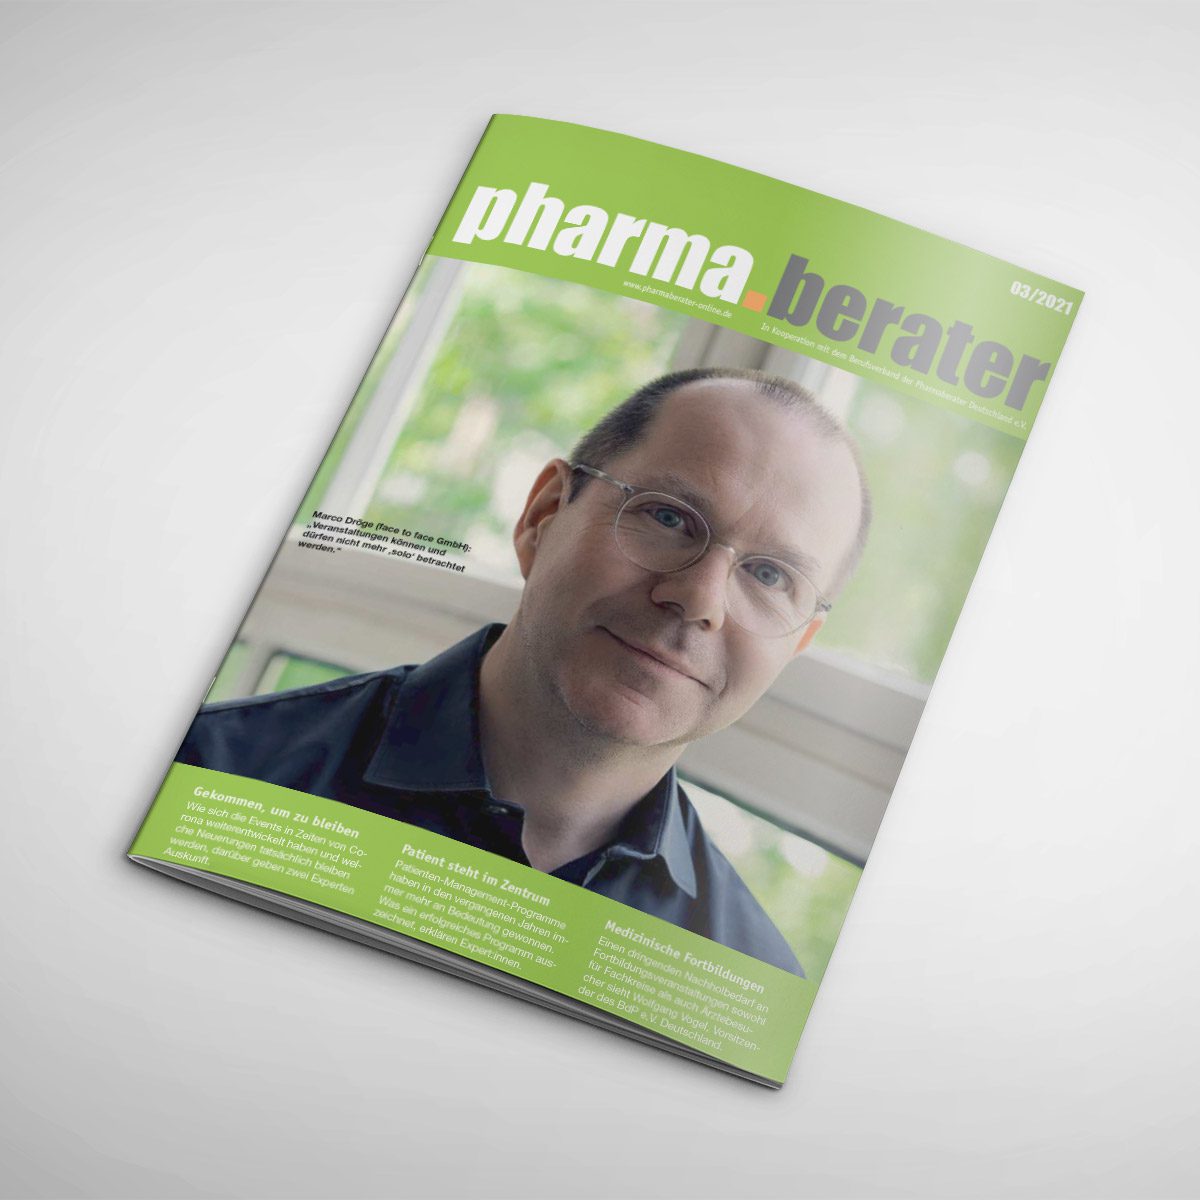 Pharma relations cover